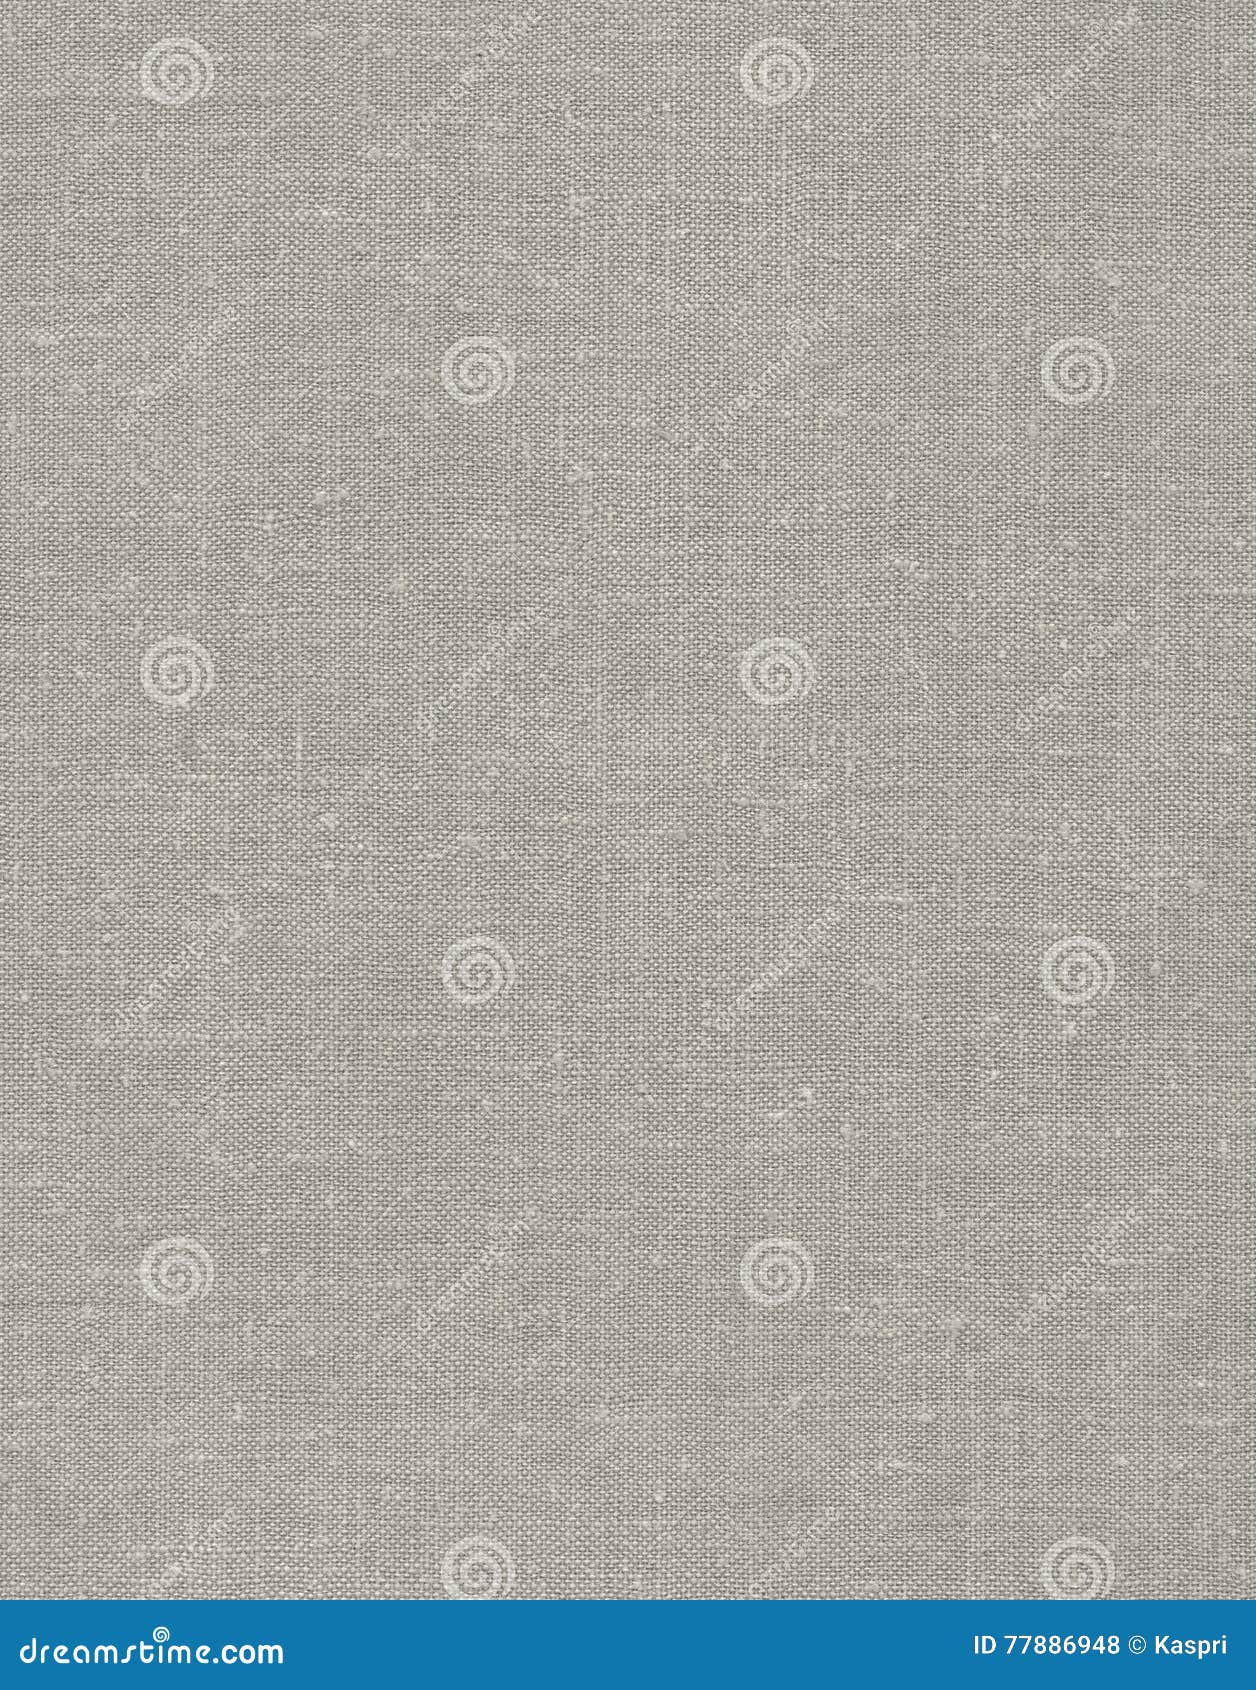 old rustic natural vintage linen burlap textured fabric texture, background, tan, beige, yellowish, grey vertical pattern macro